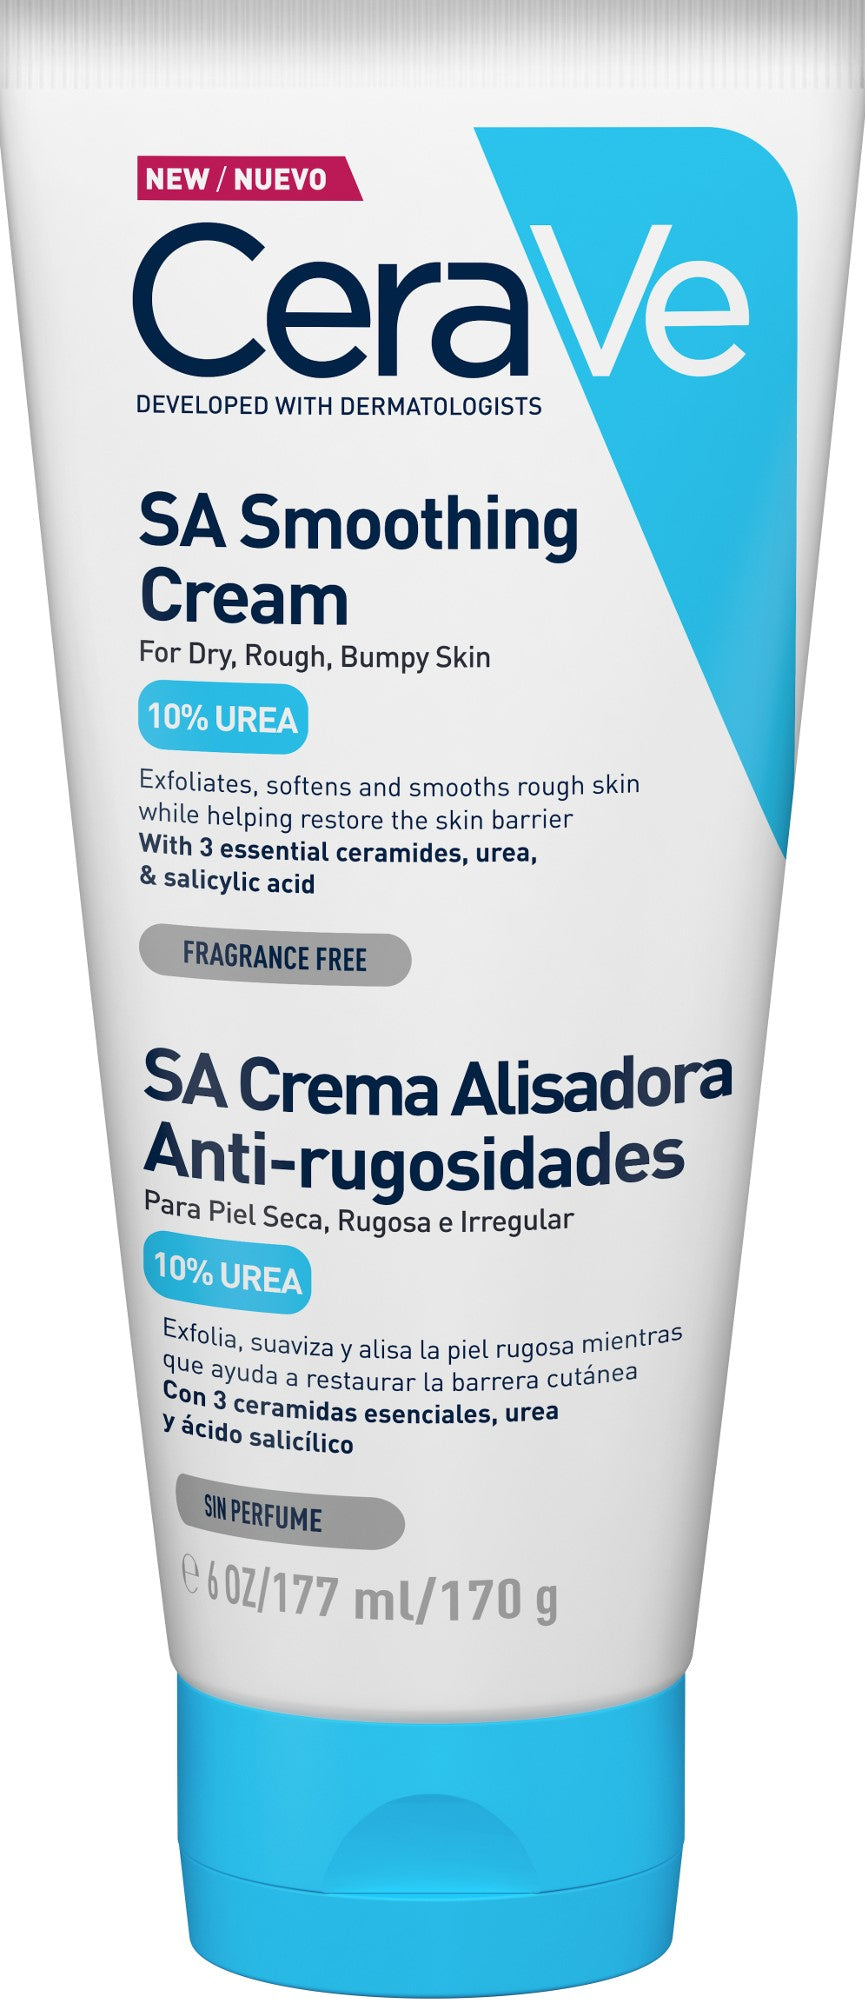 Cerave SA Smoothing Cream